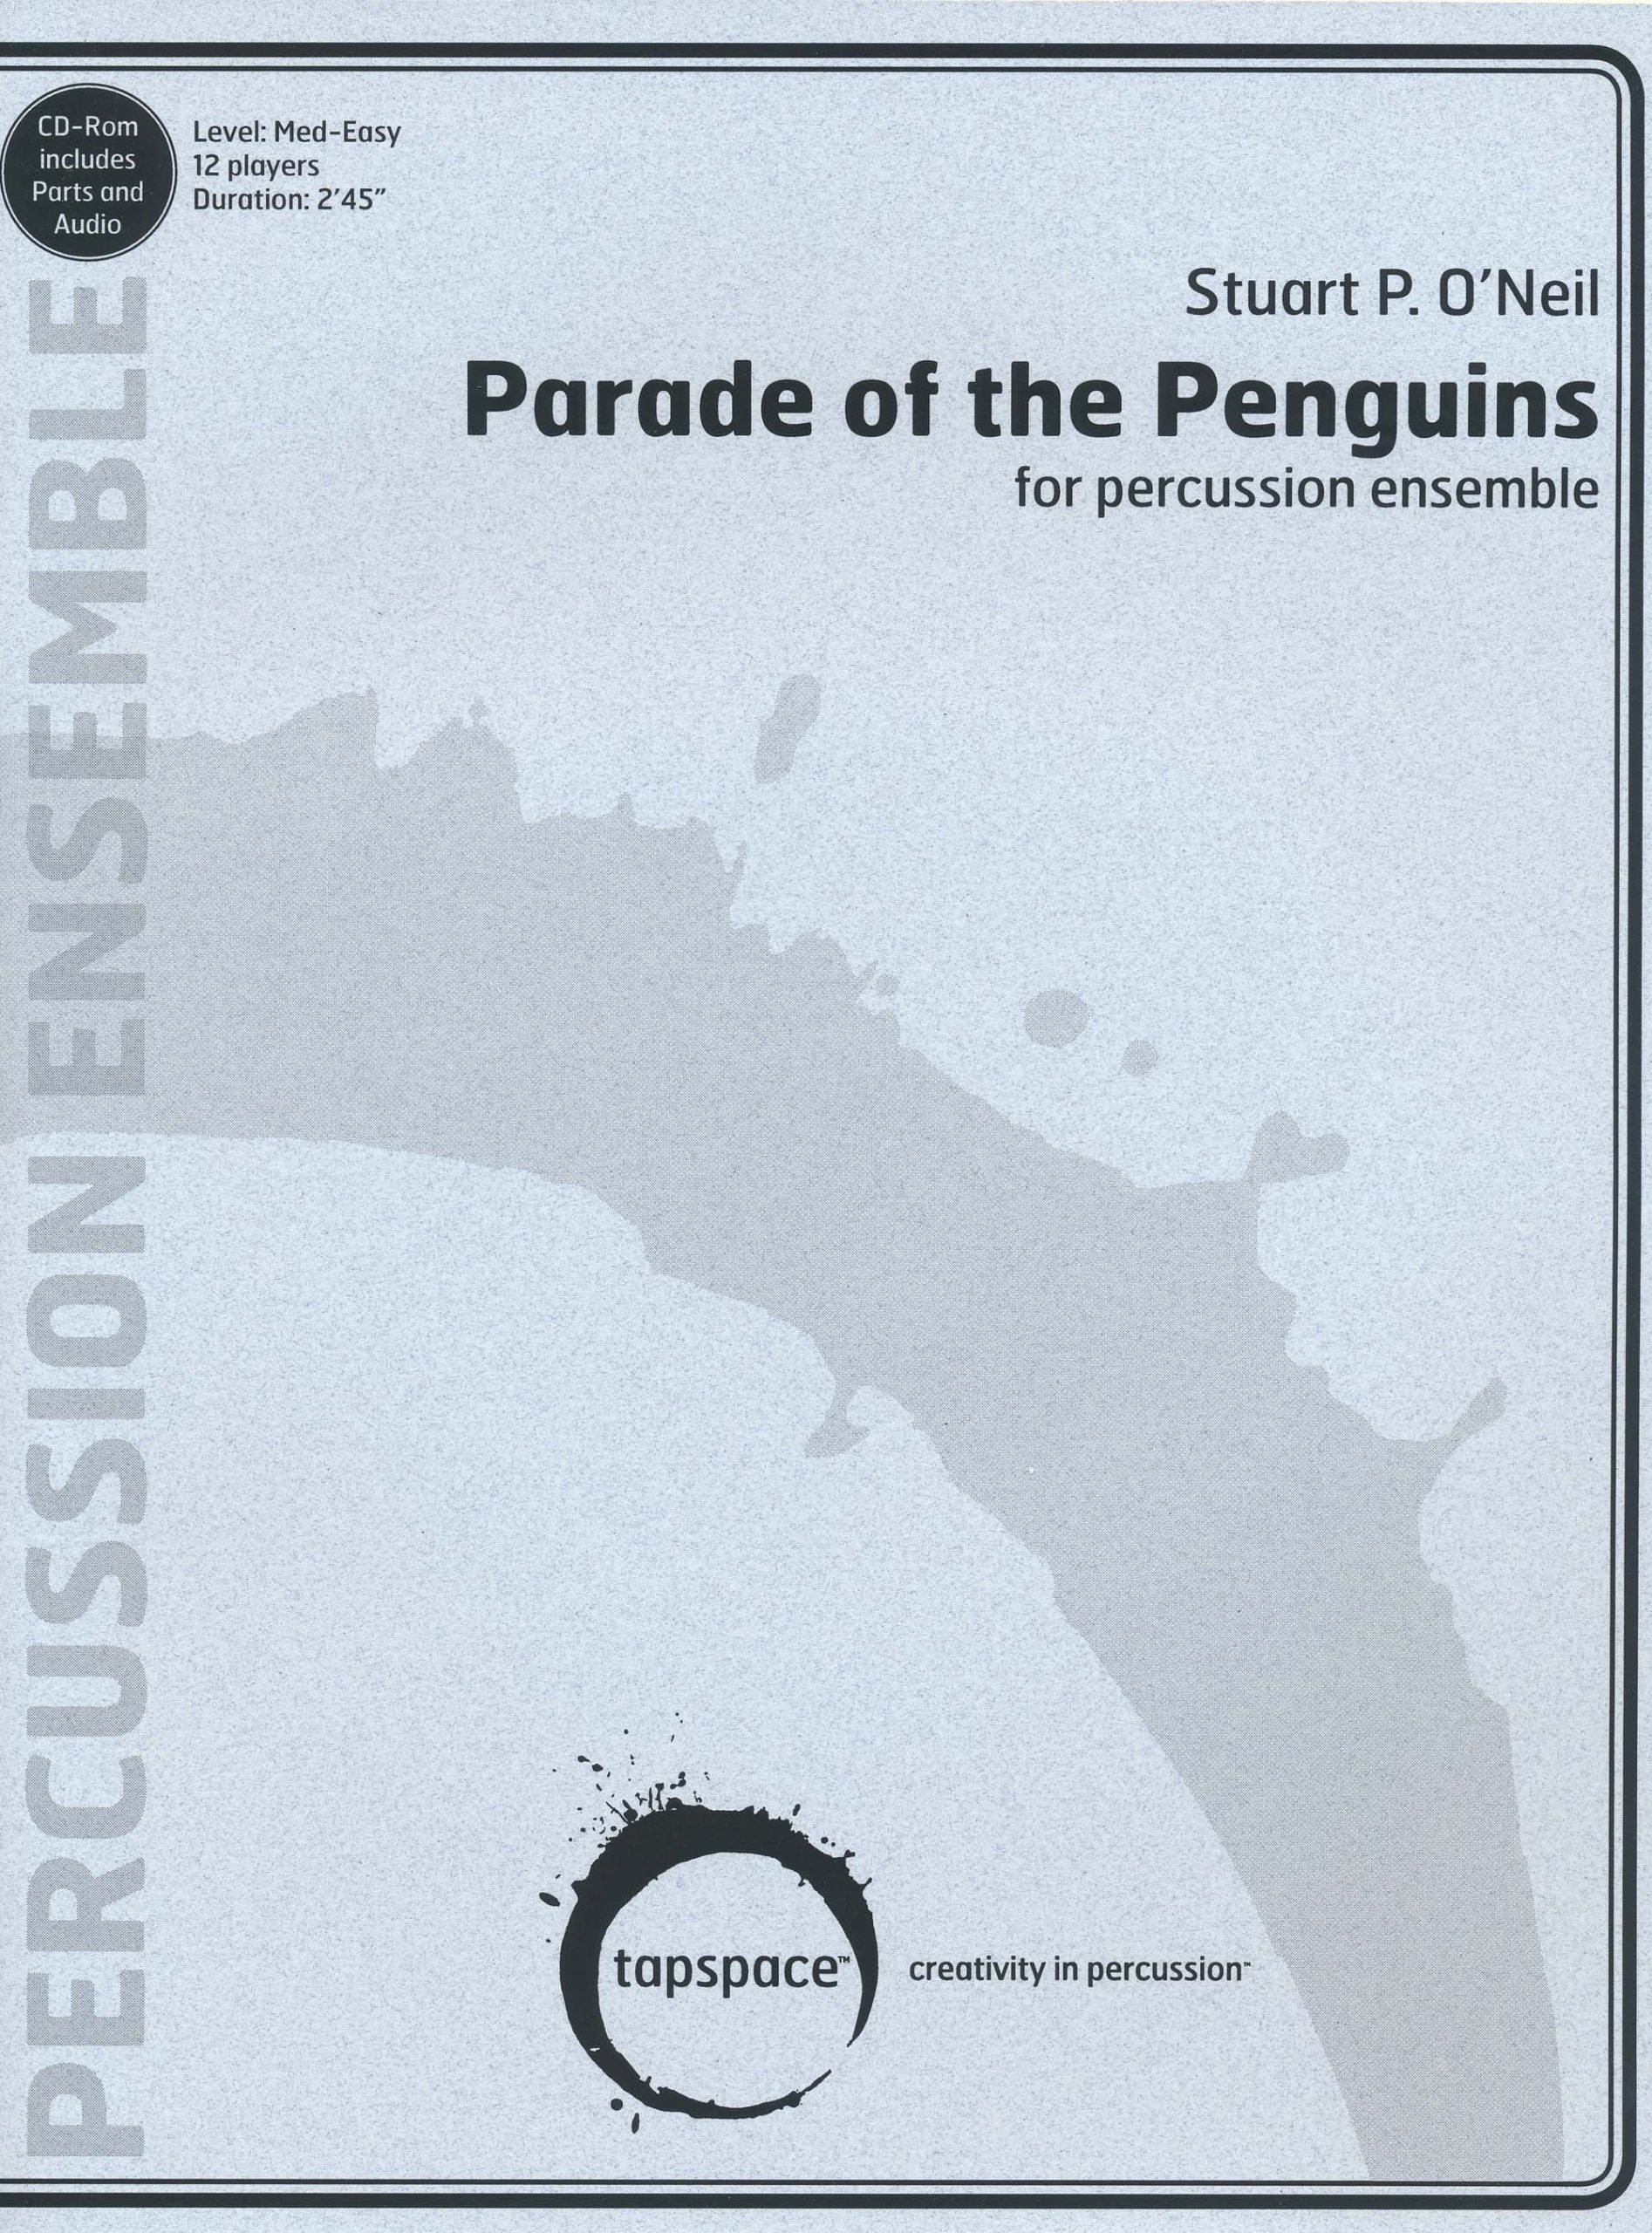 Parade of the Penguins by Stuart O'Neil